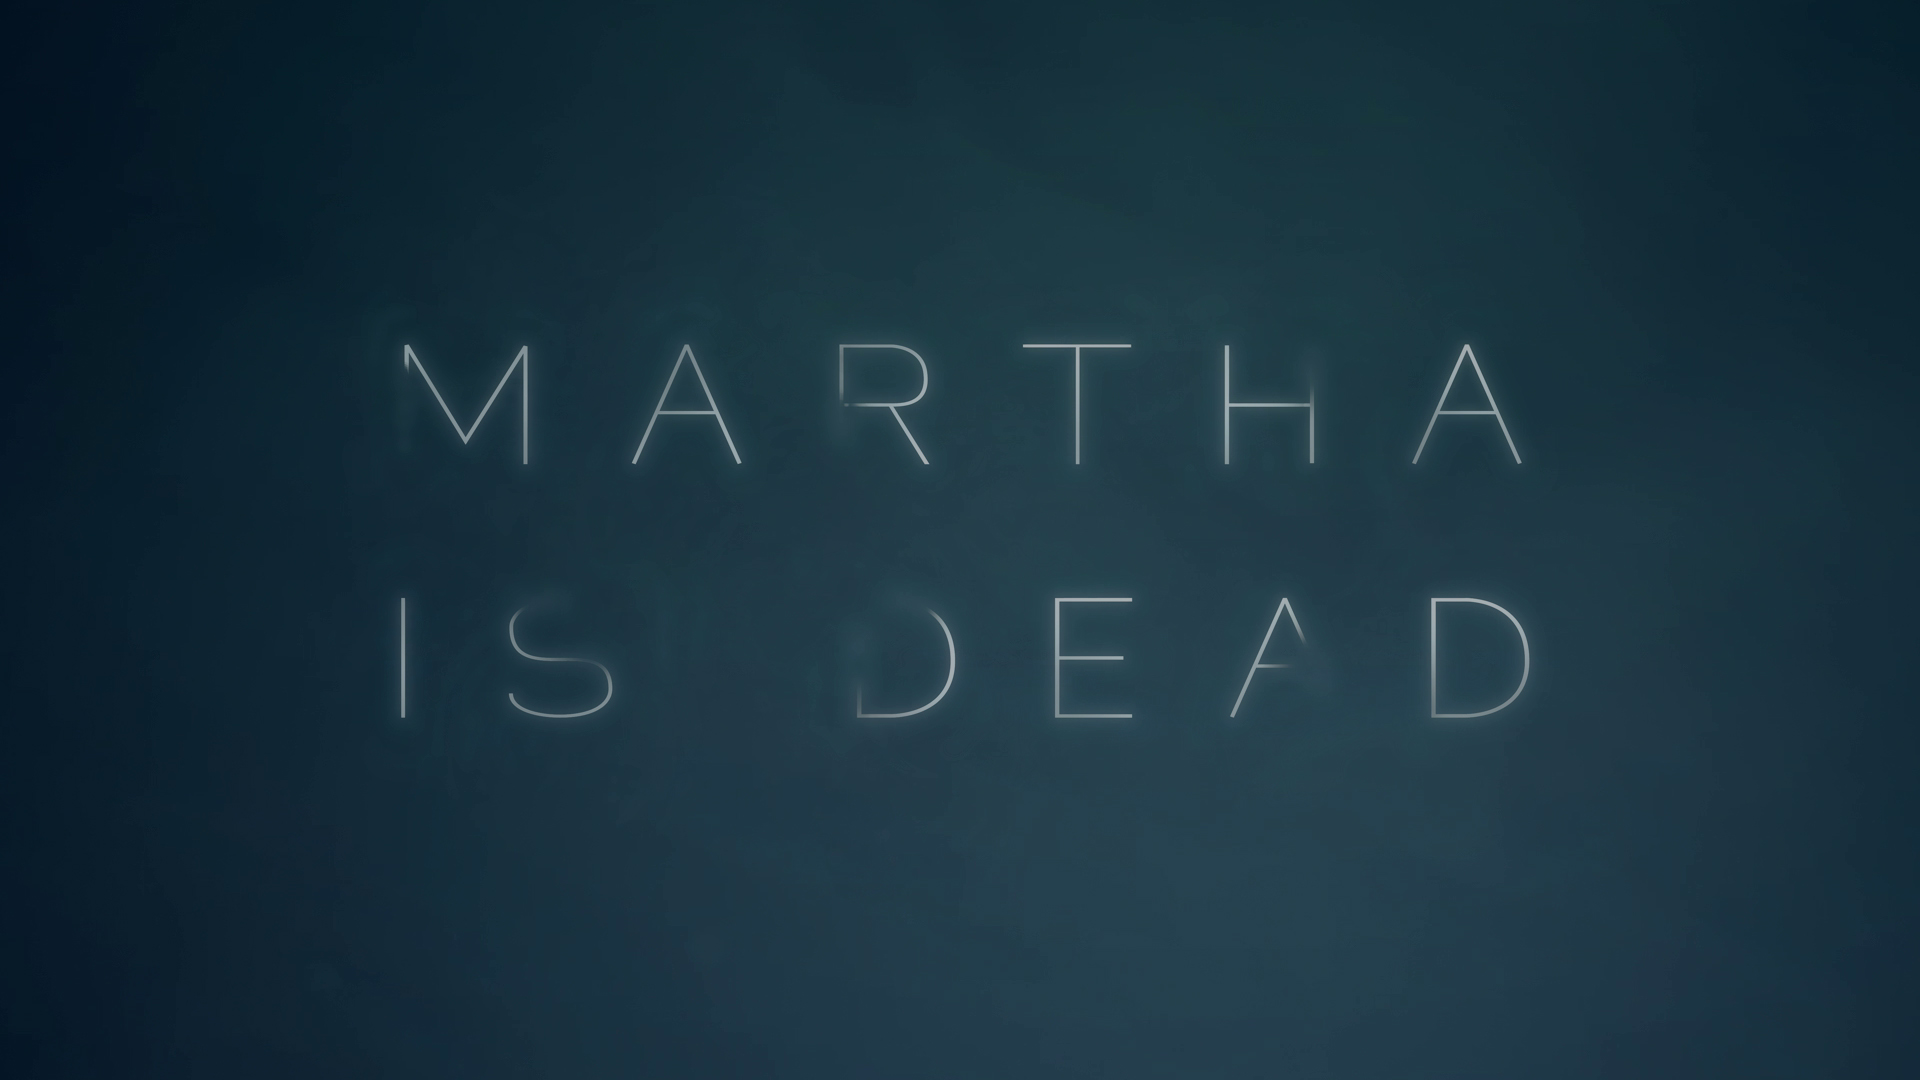 martha is dead steam download free